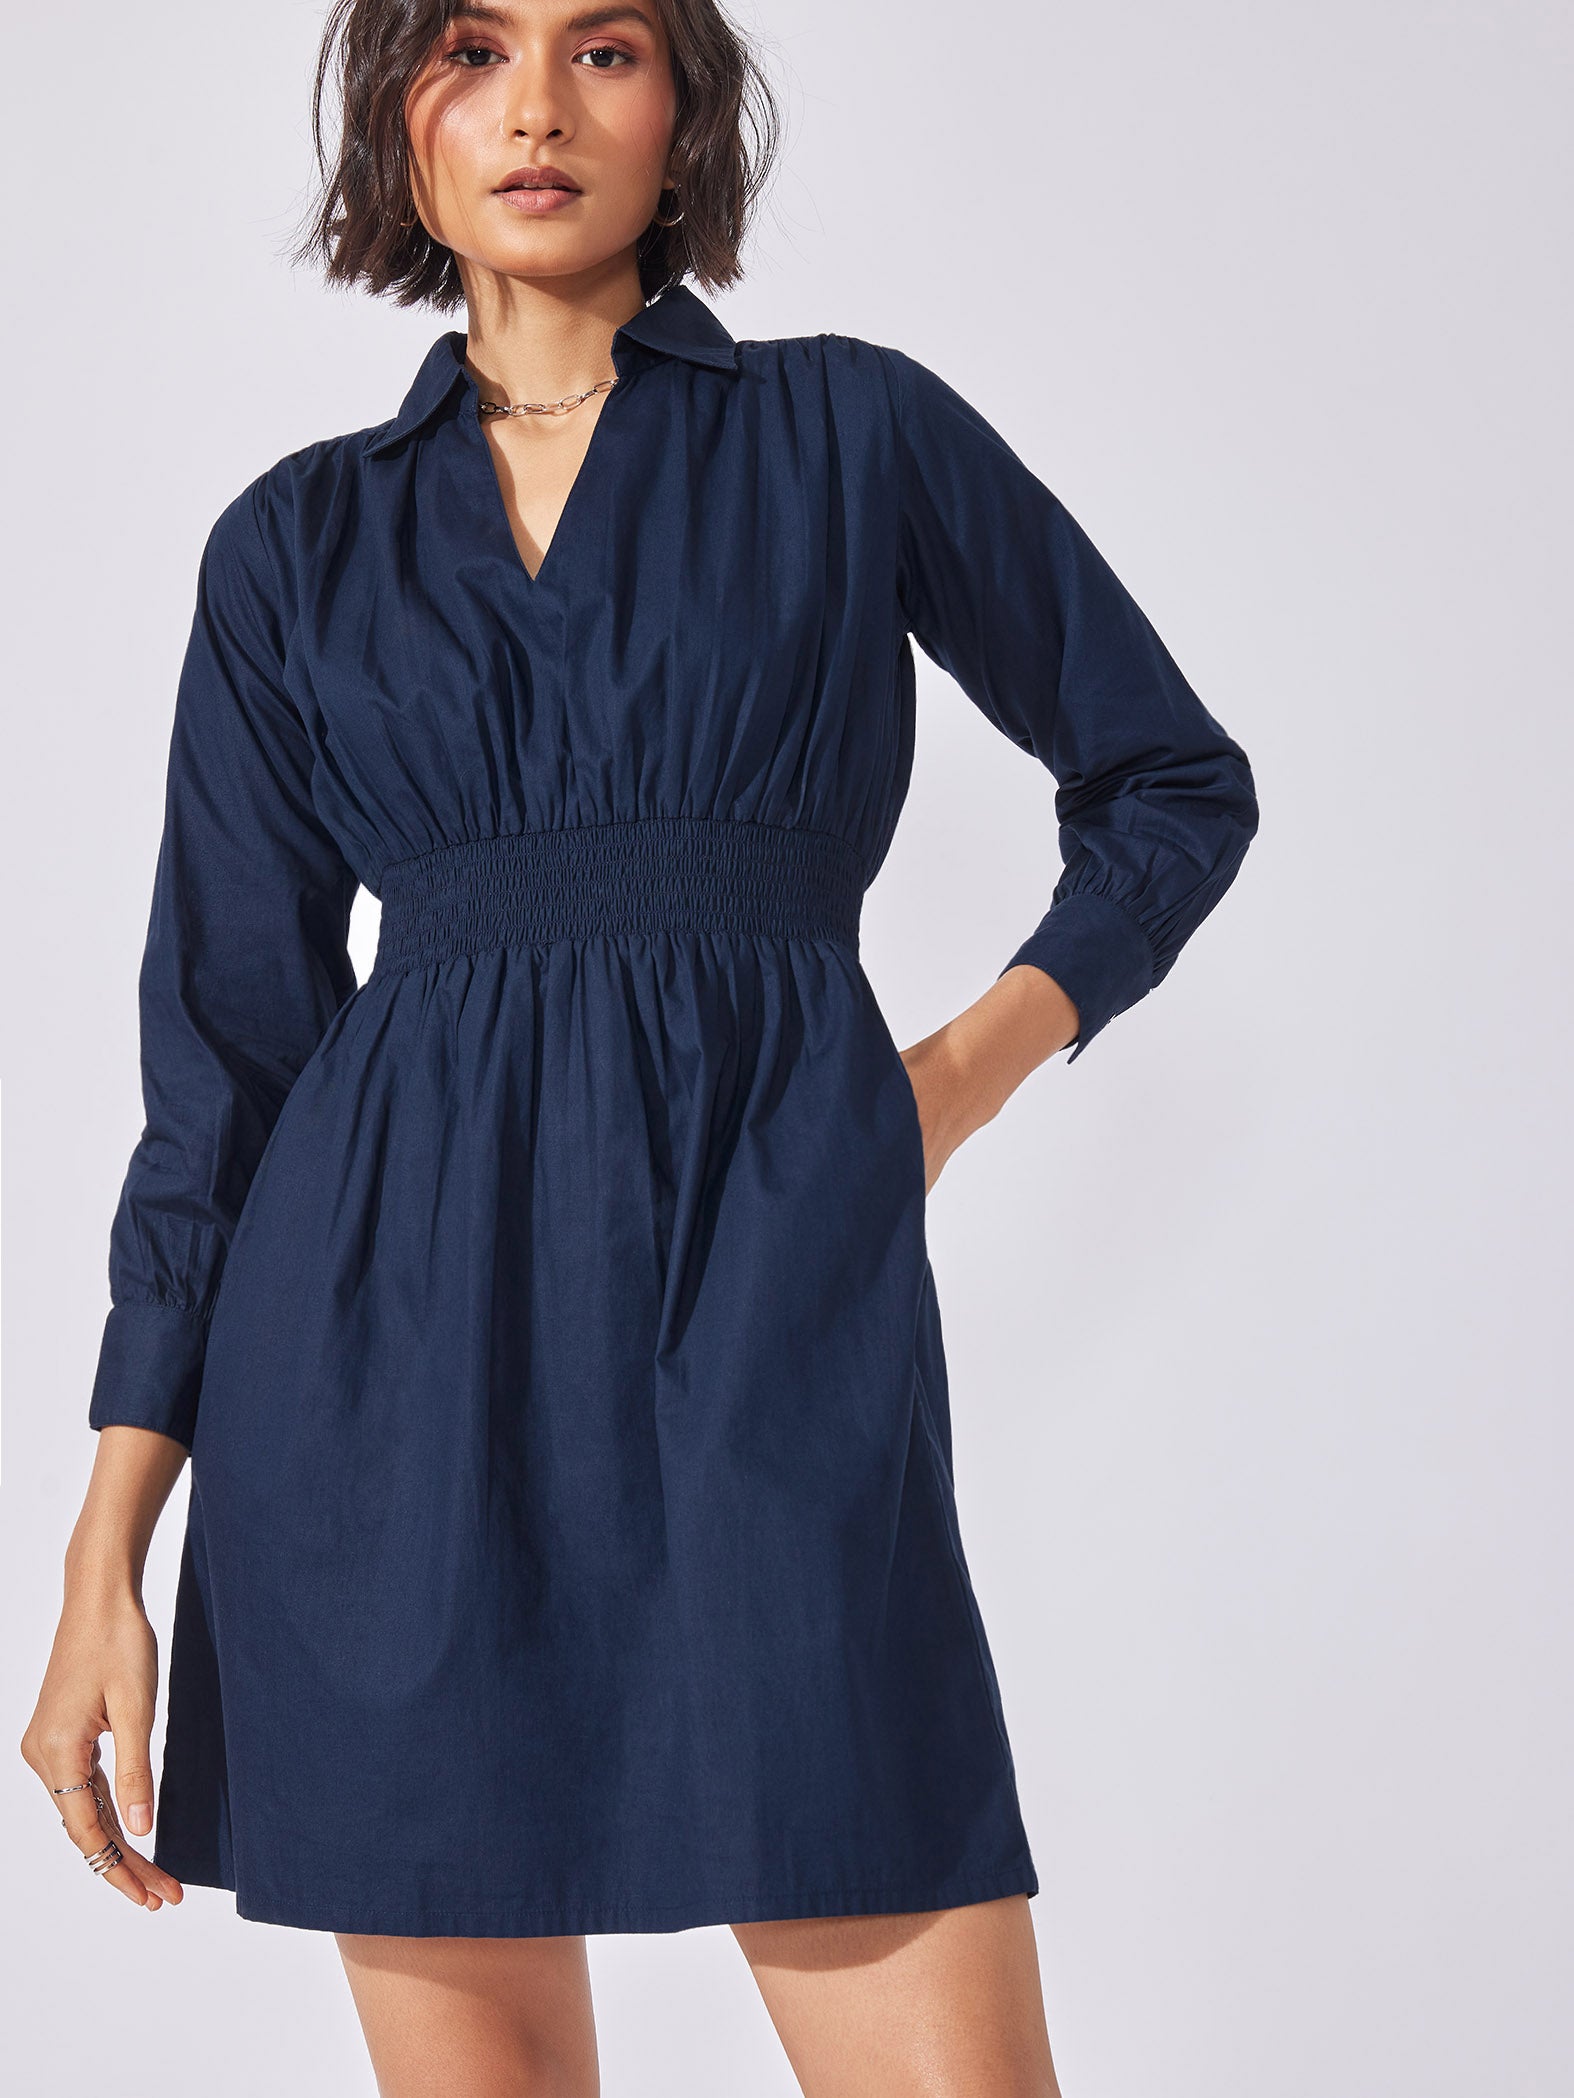 Mini dress Louis Vuitton Beige size 34 FR in Cotton - elasthane - 31614892